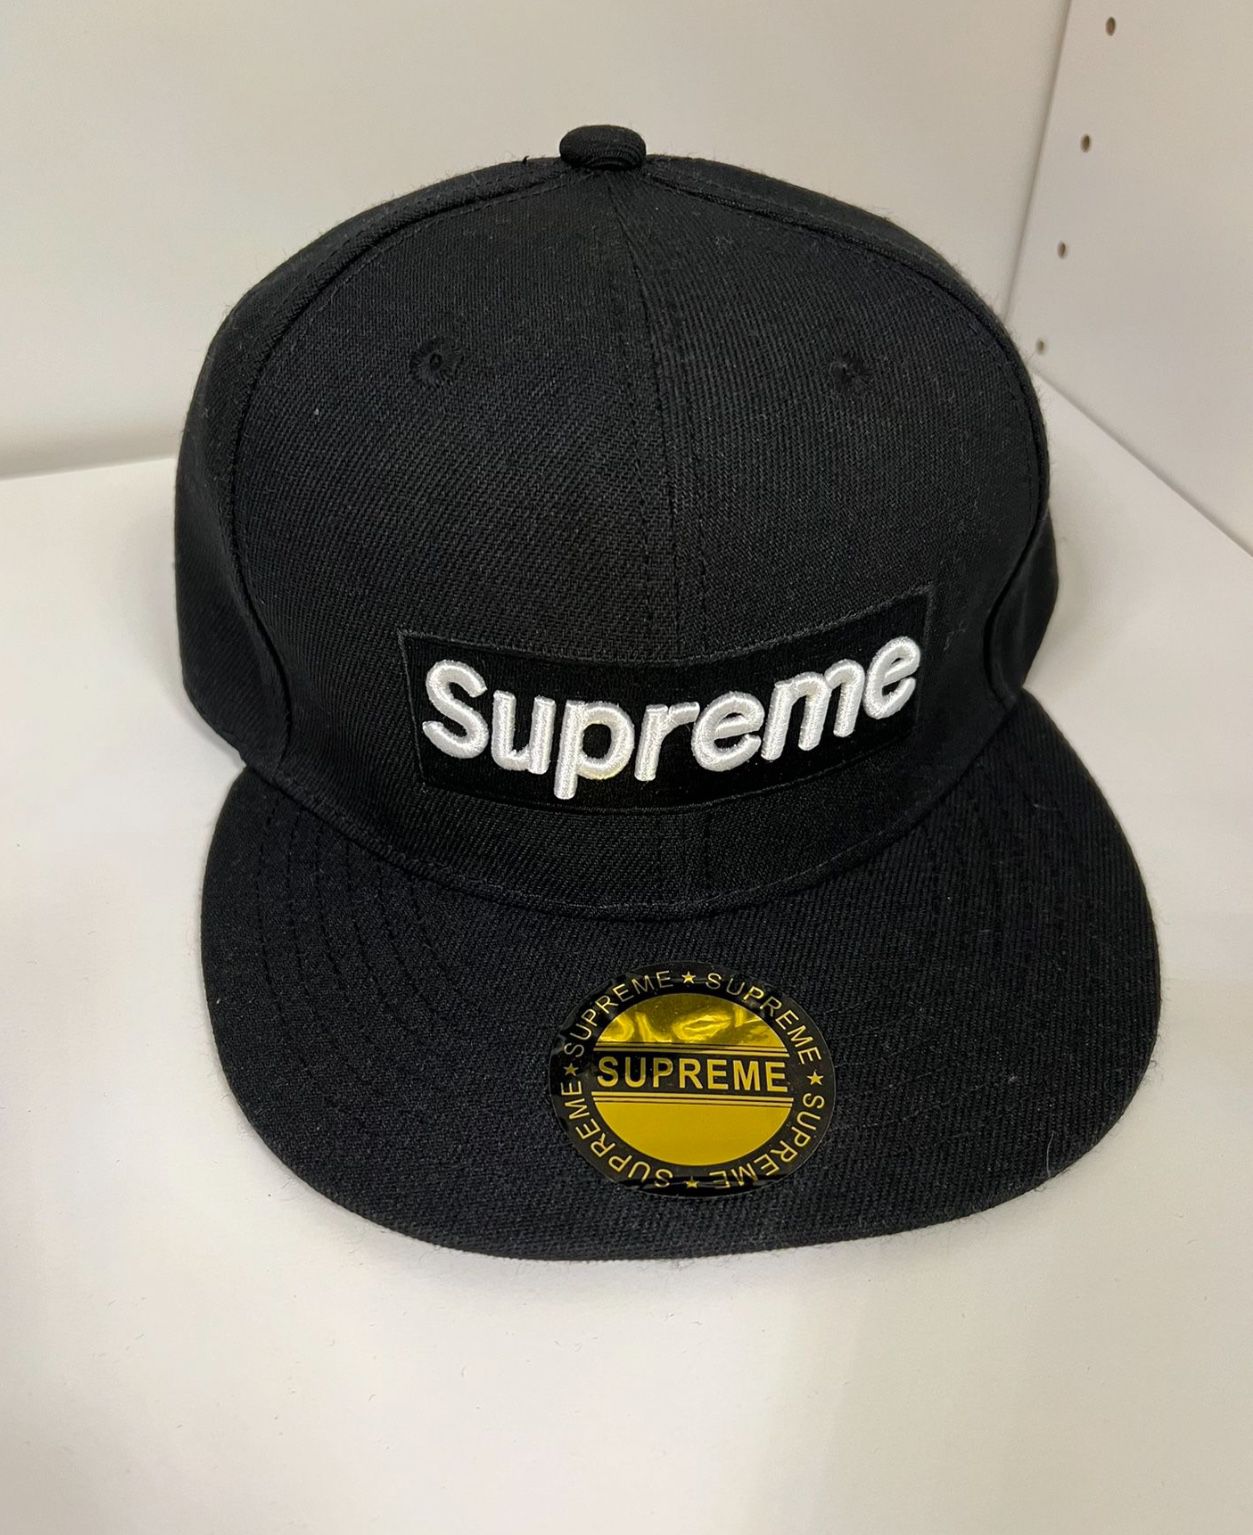 Men’s Hat supreme SnapBack $60 New